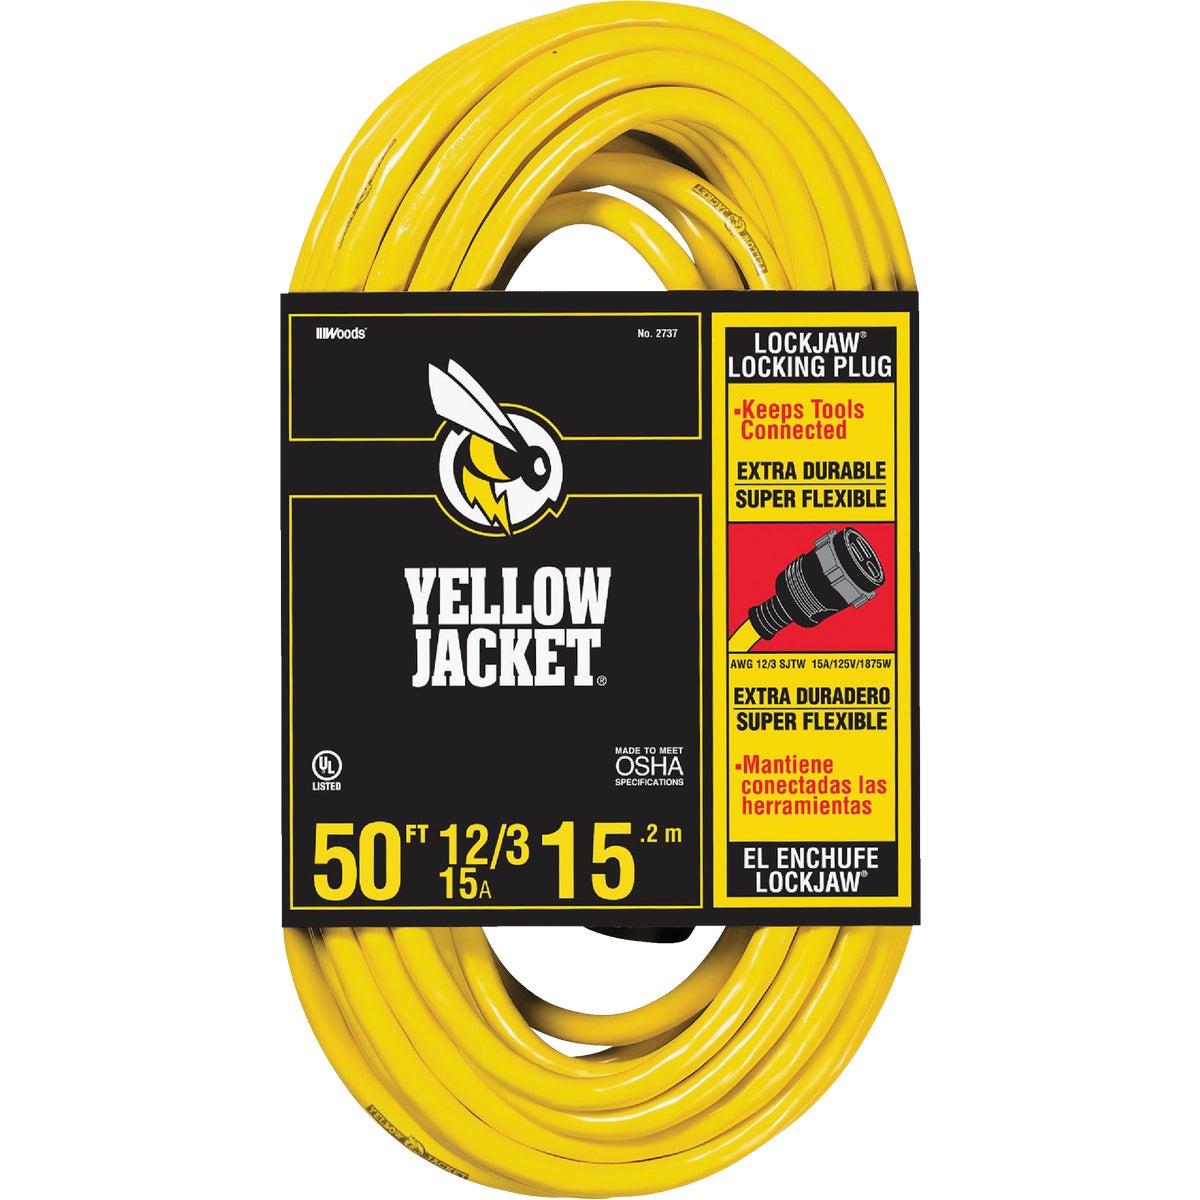 Item 544019, Yellow Jacket cord with Lockjaw locking plug grabs plug blades for a tight 